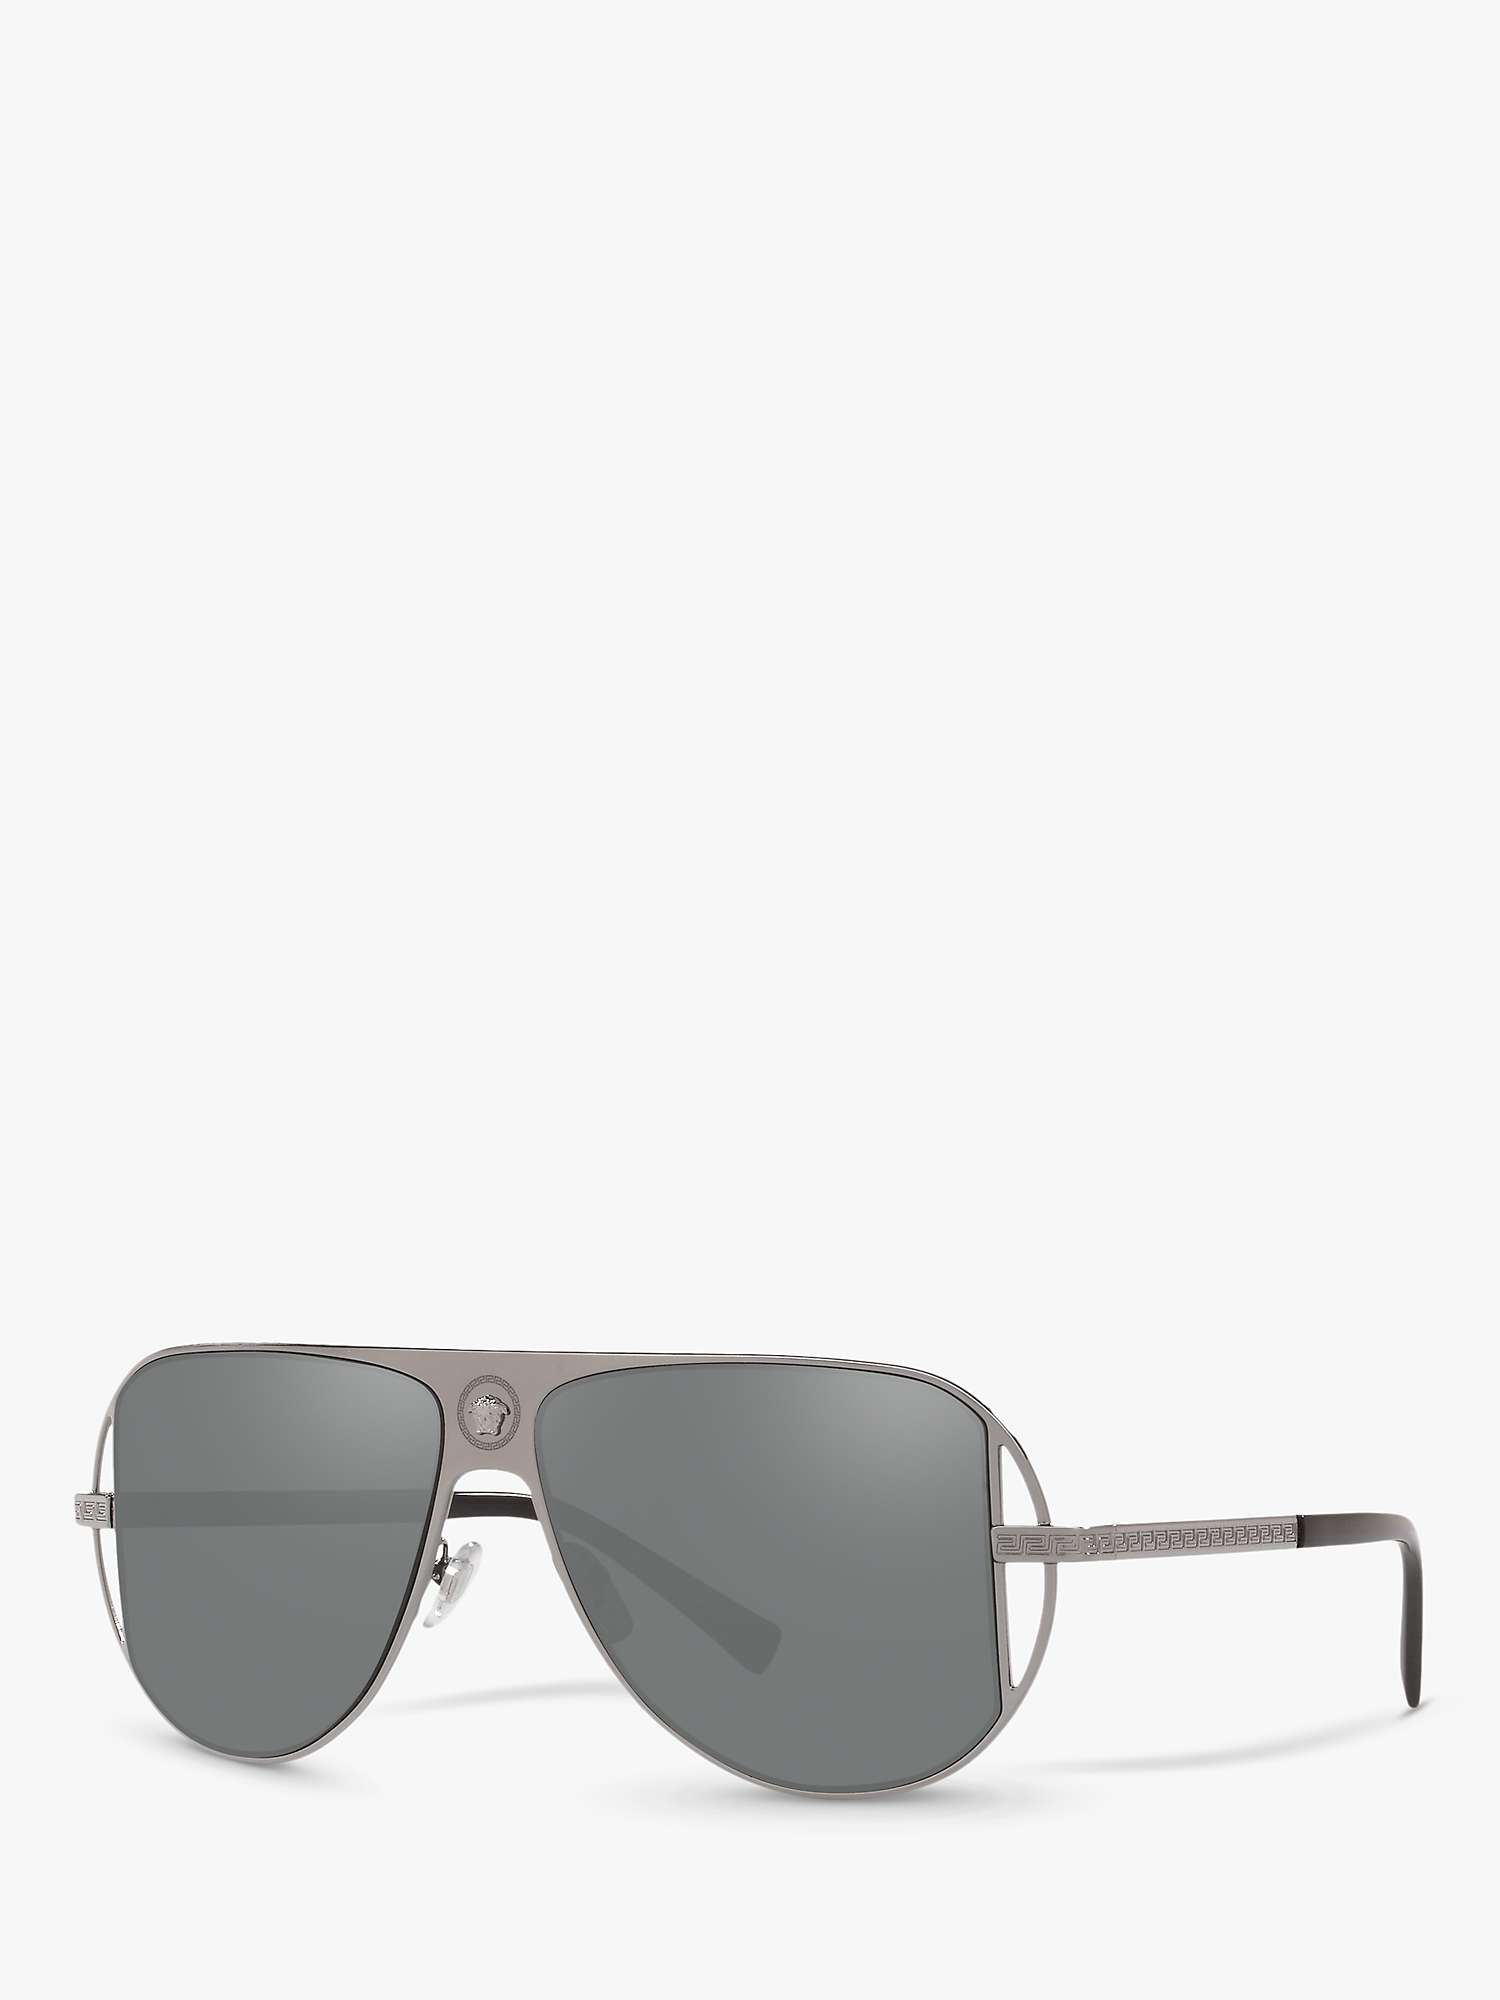 Versace VE2212 Men's Aviator Sunglasses, Silver/Grey at John Lewis ...